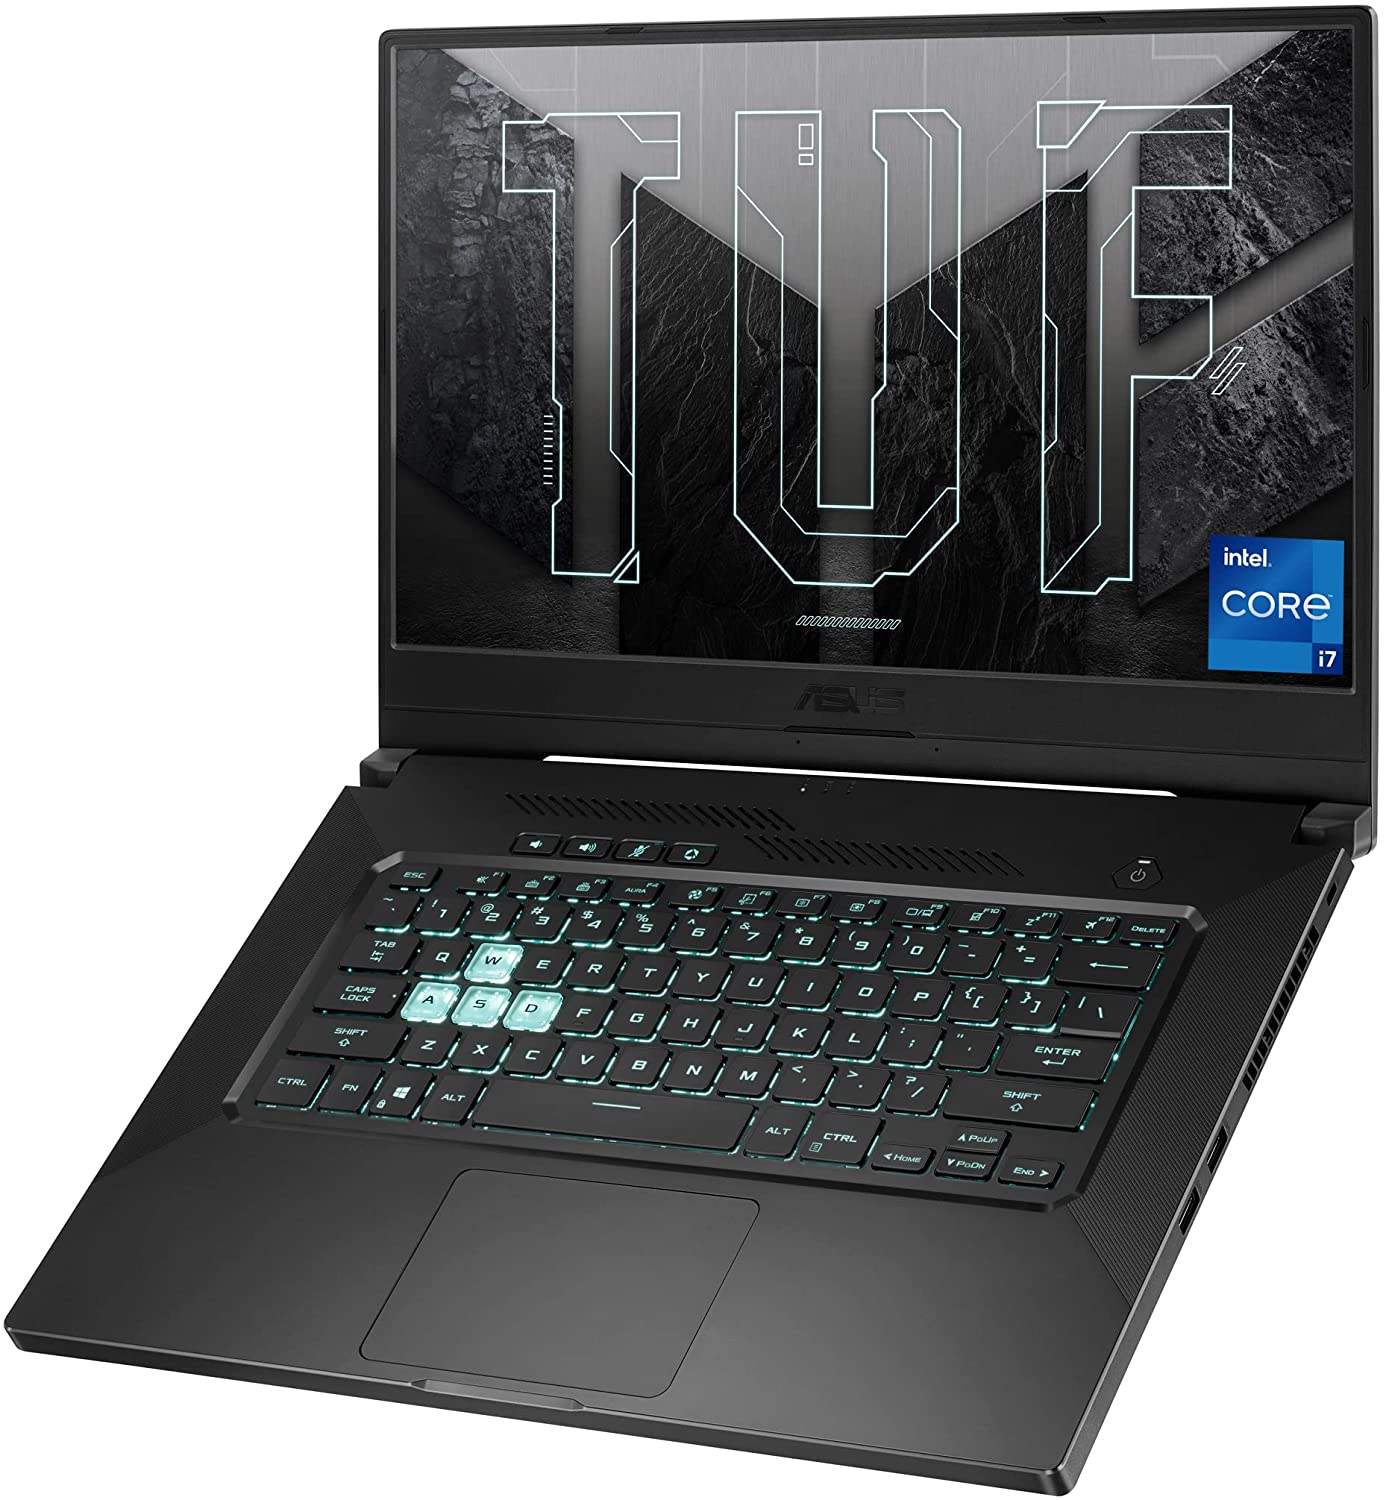 ASUS TUF Dash 15 (2021) Ultra Slim Gaming Laptop, 15.6” 144Hz FHD, GeForce RTX 3050 Ti, Intel Core i7-11370H, 8GB DDR4, 512GB PCIe NVMe SSD, Wi-Fi 6, Windows 10, Eclipse Grey Color, TUF516PE-AB73